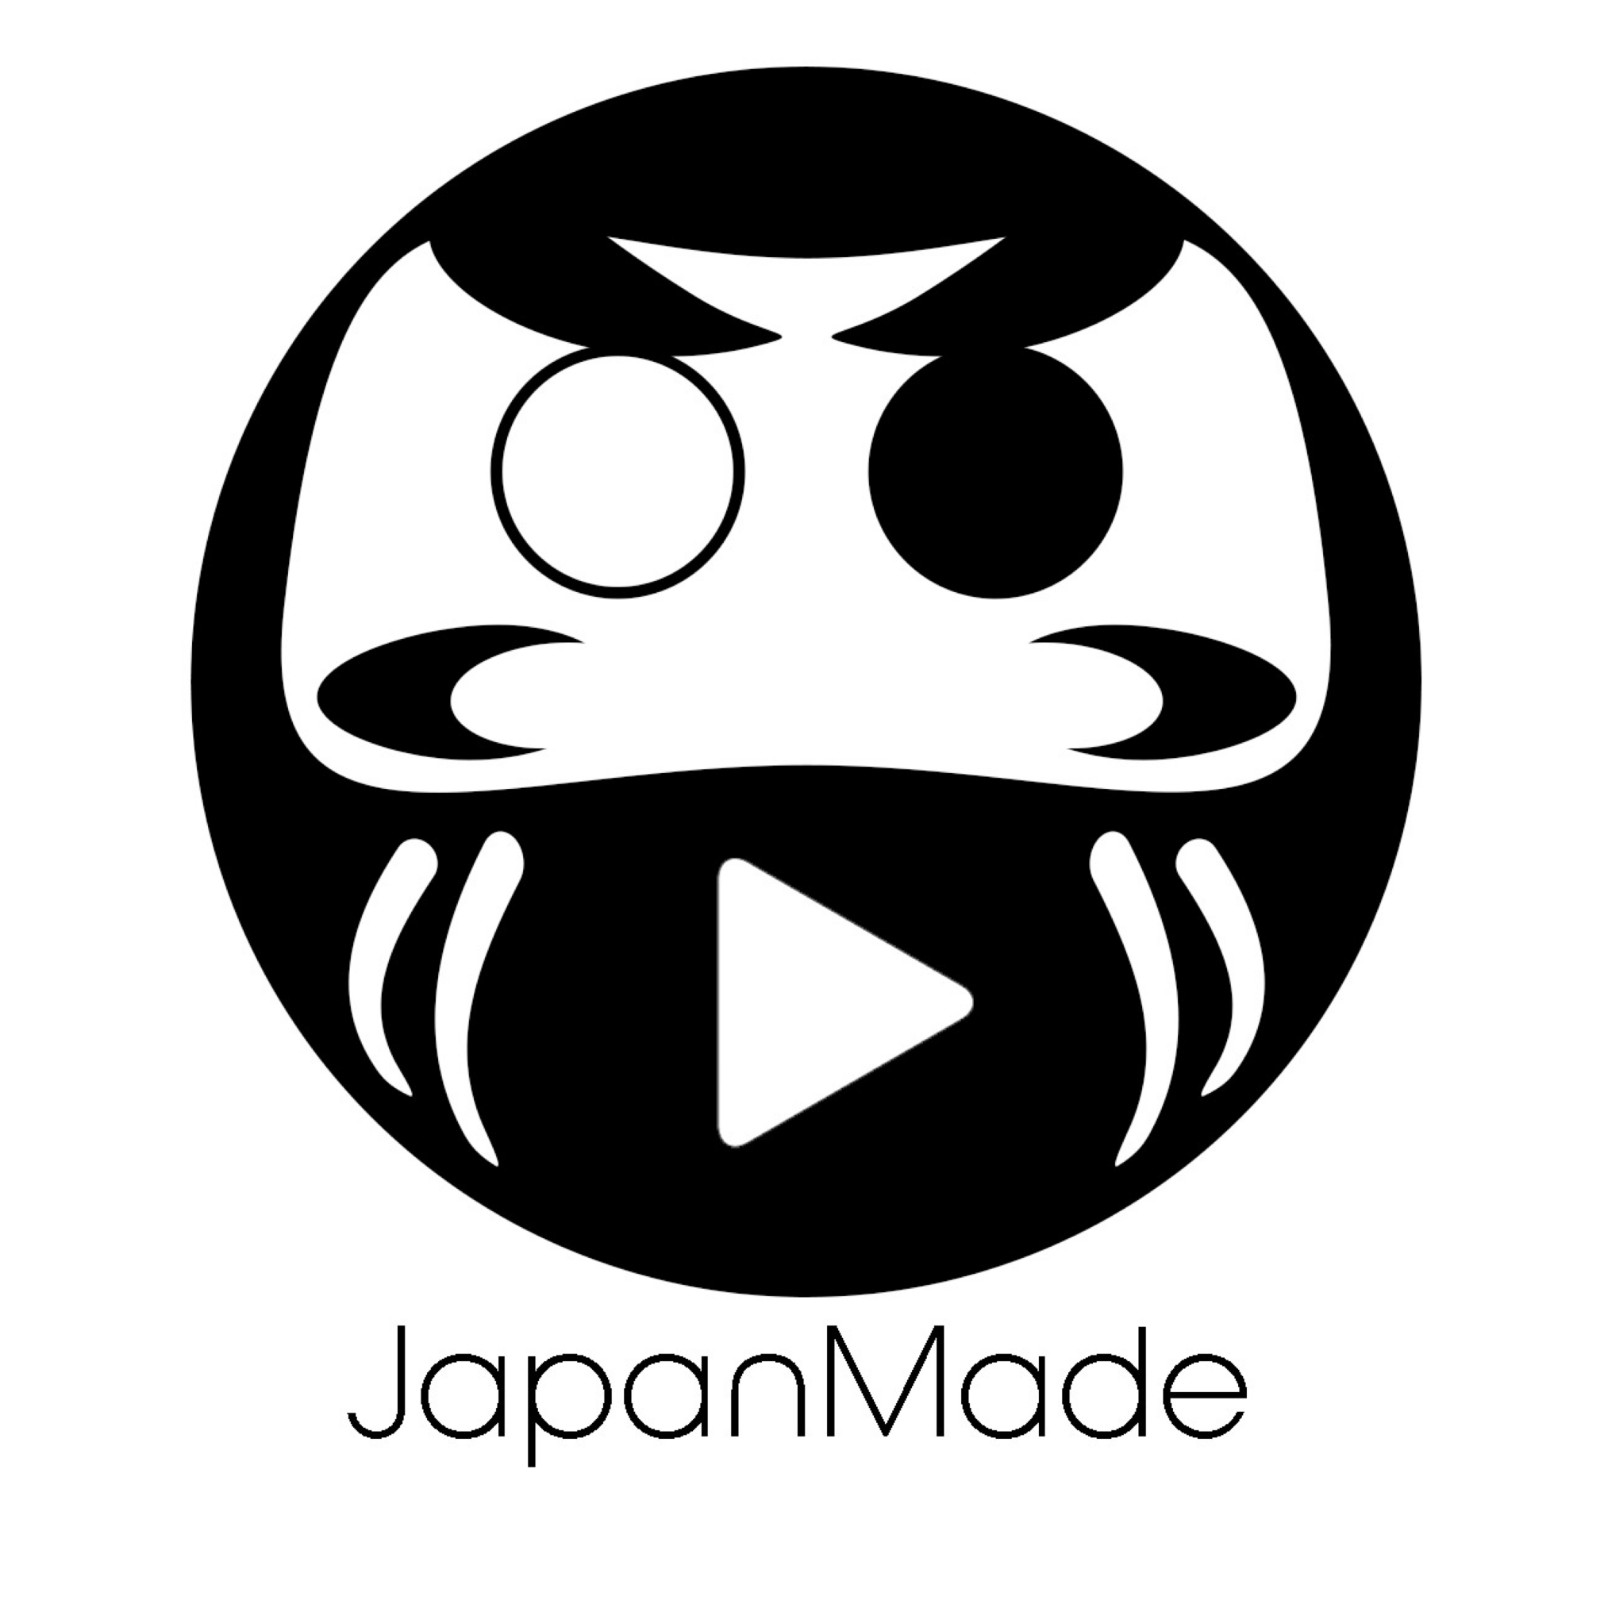 JapanMade